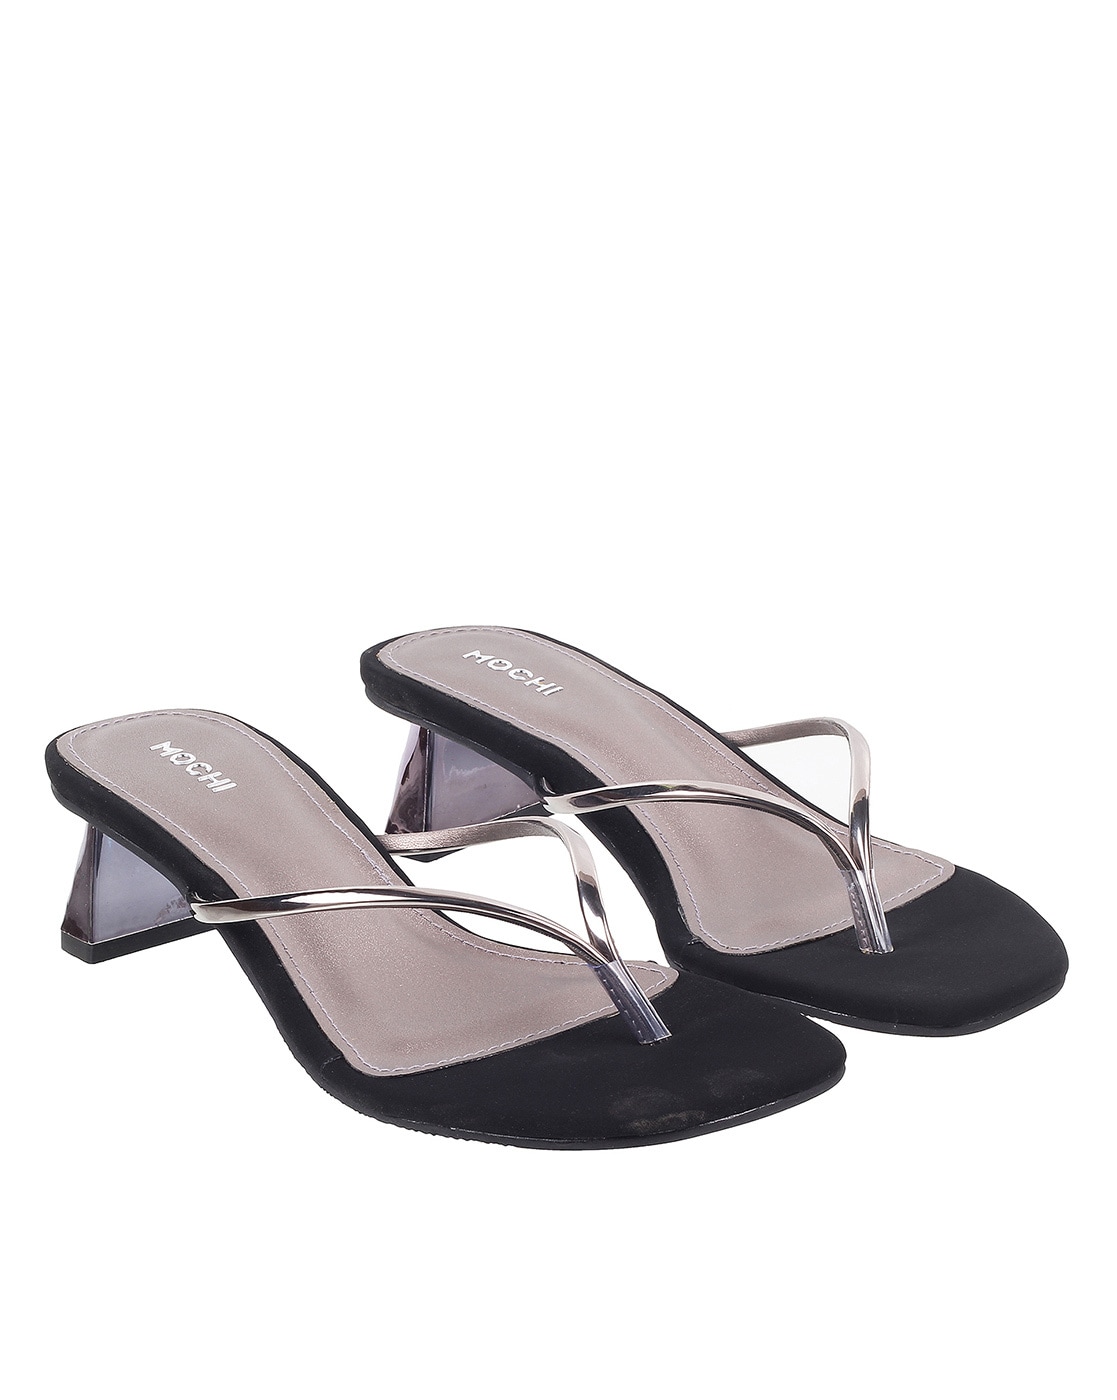 Buy online Mochi Women Gun Metal Synthetic Sandals Size (3 Uk/india (36eu))  (35-3367-29-36-gun Metal) from heels for Women by Mochi for ₹1979 at 1% off  | 2024 Limeroad.com